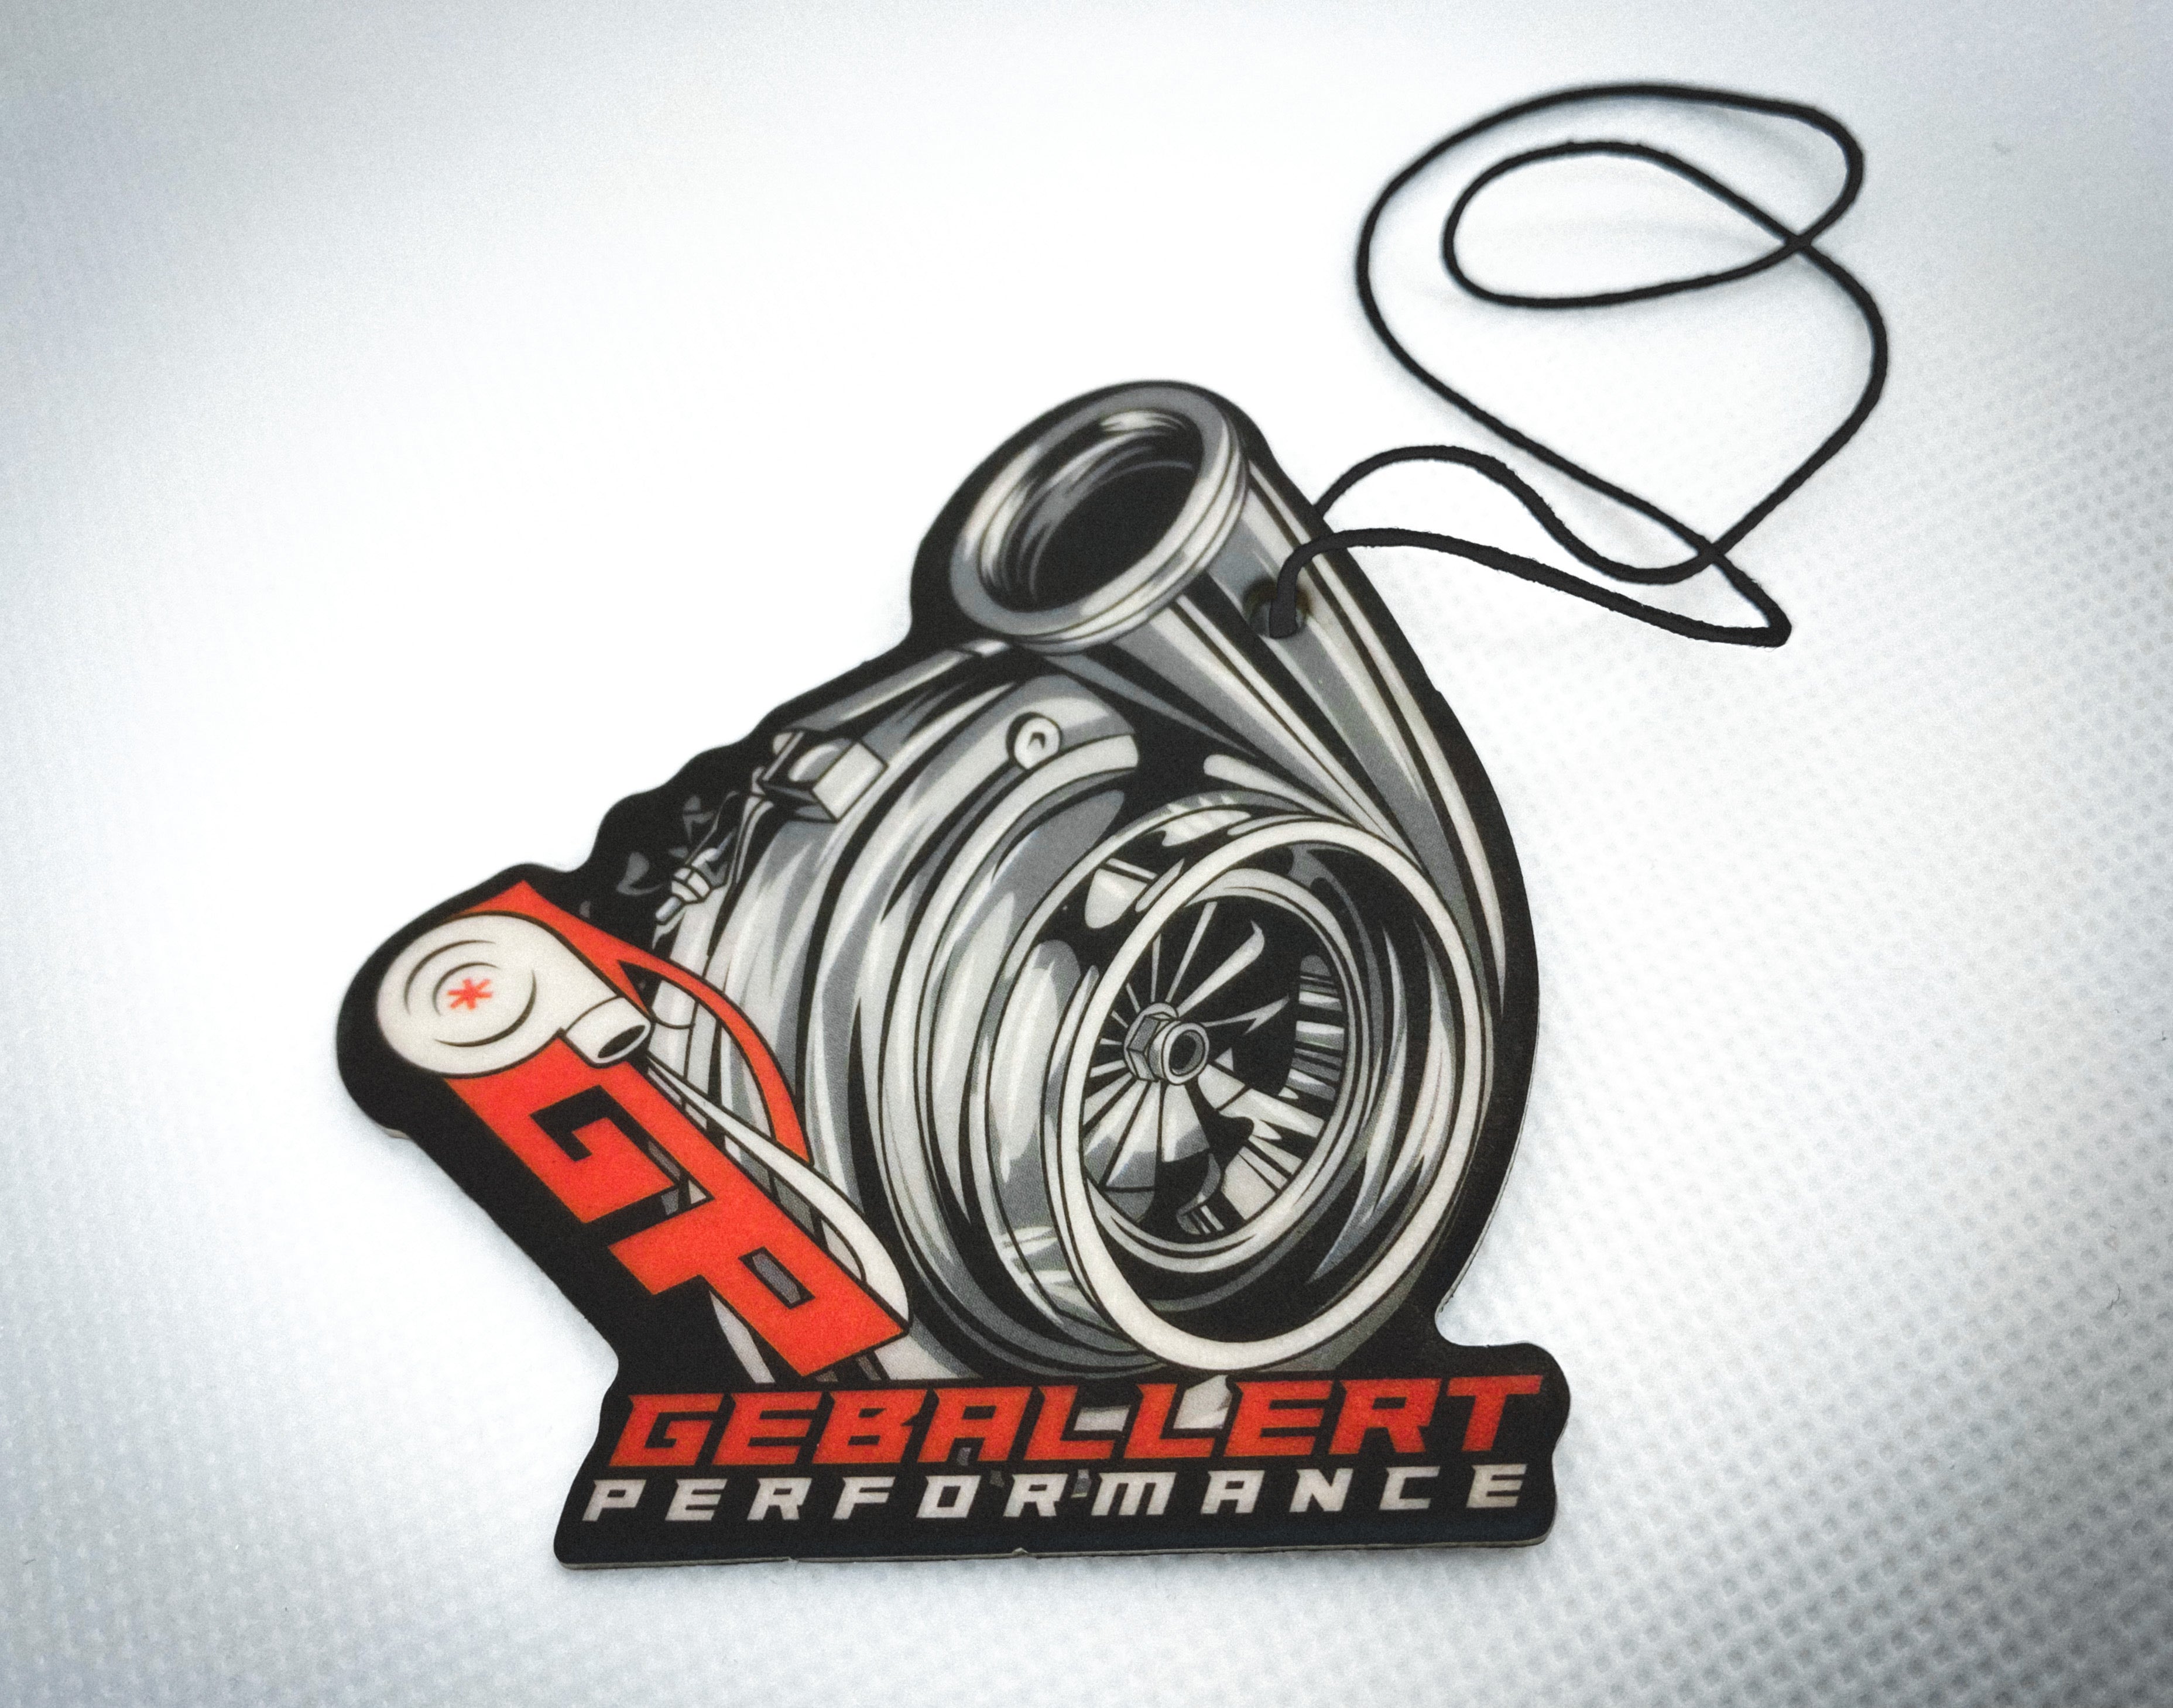 Duftbaum Turbo Car Cent Duft - Geballert Performance – Geballert